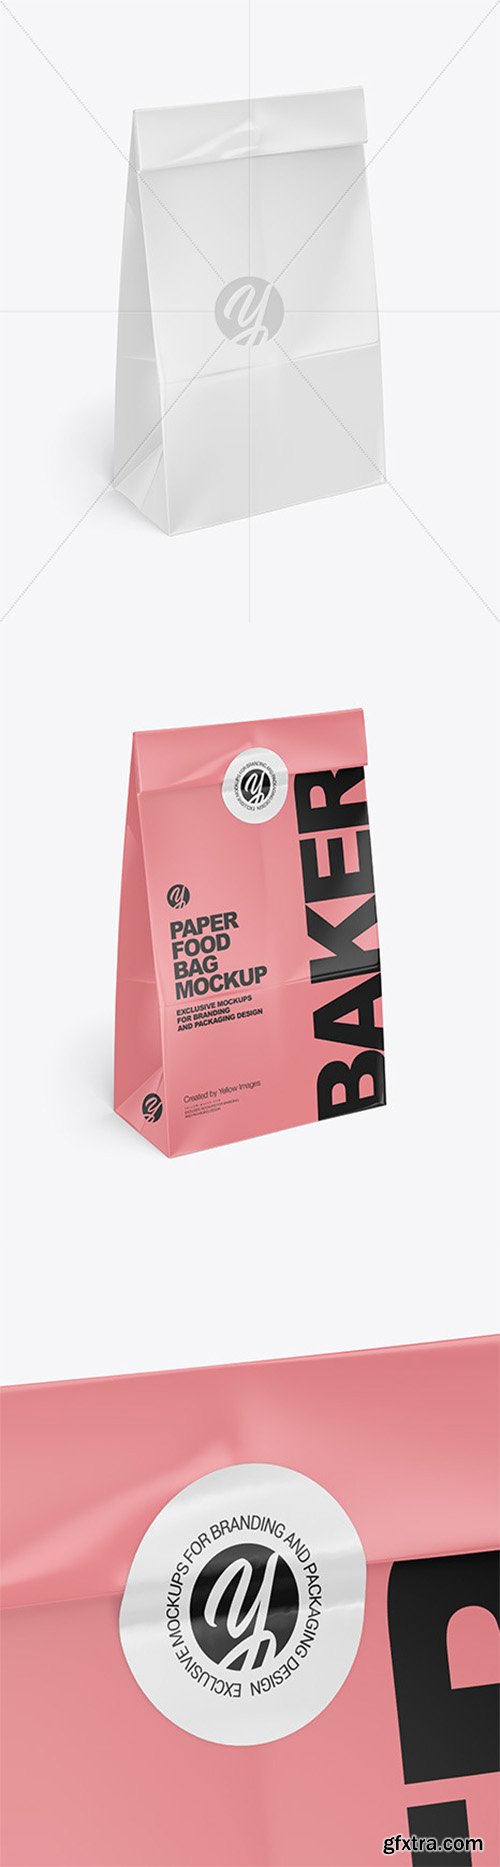 Glossy Paper Food Bag Mockup 55923